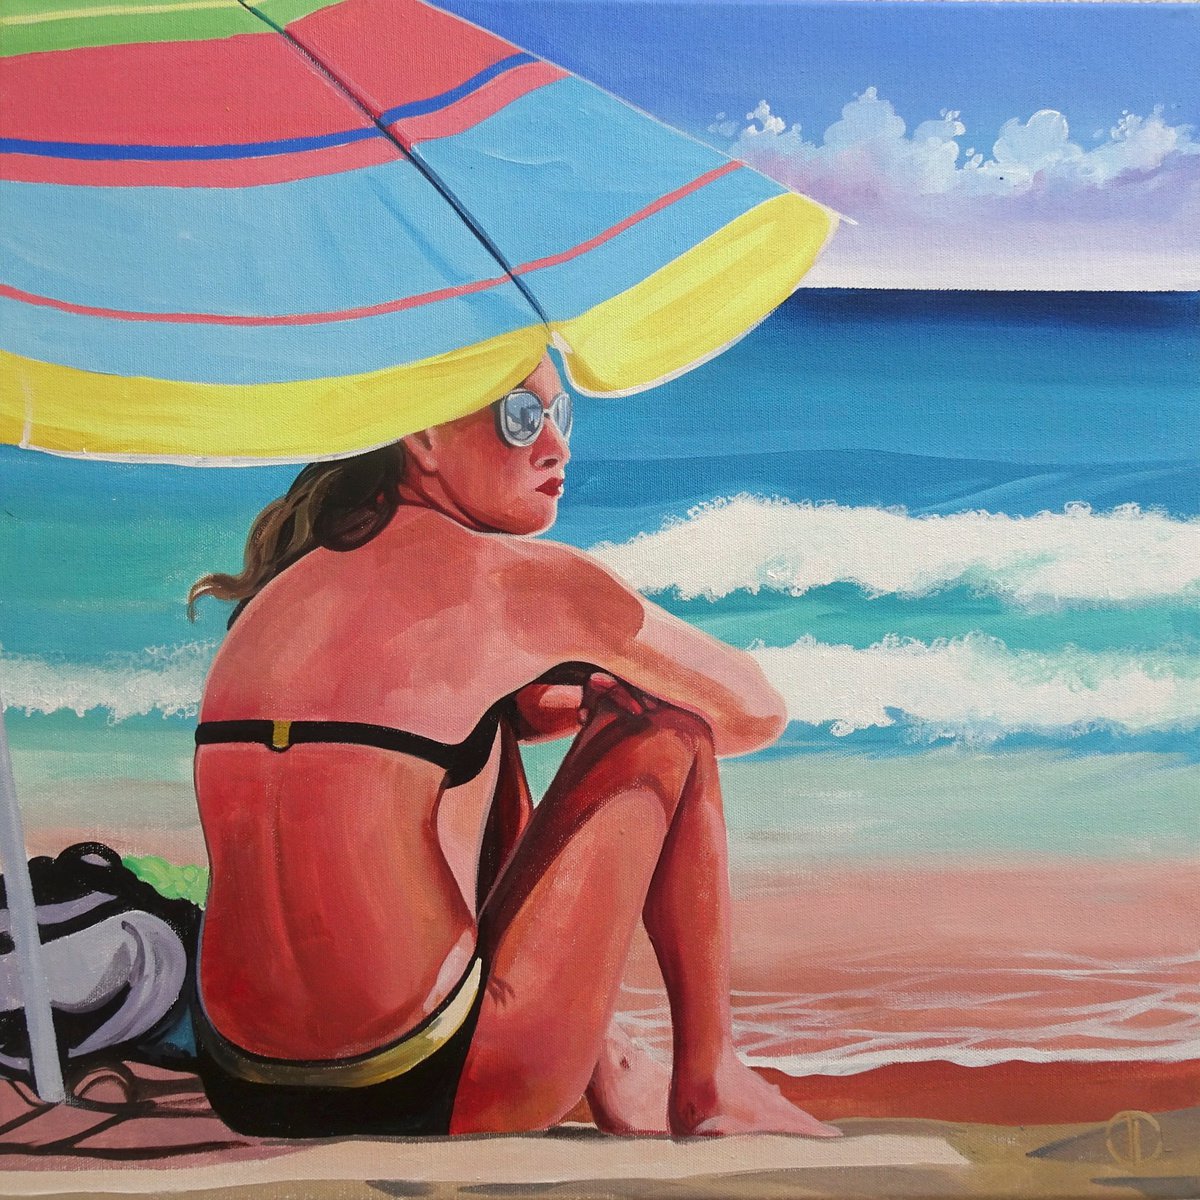 Summer Sun 2021 On The Beach by Joseph Lynch